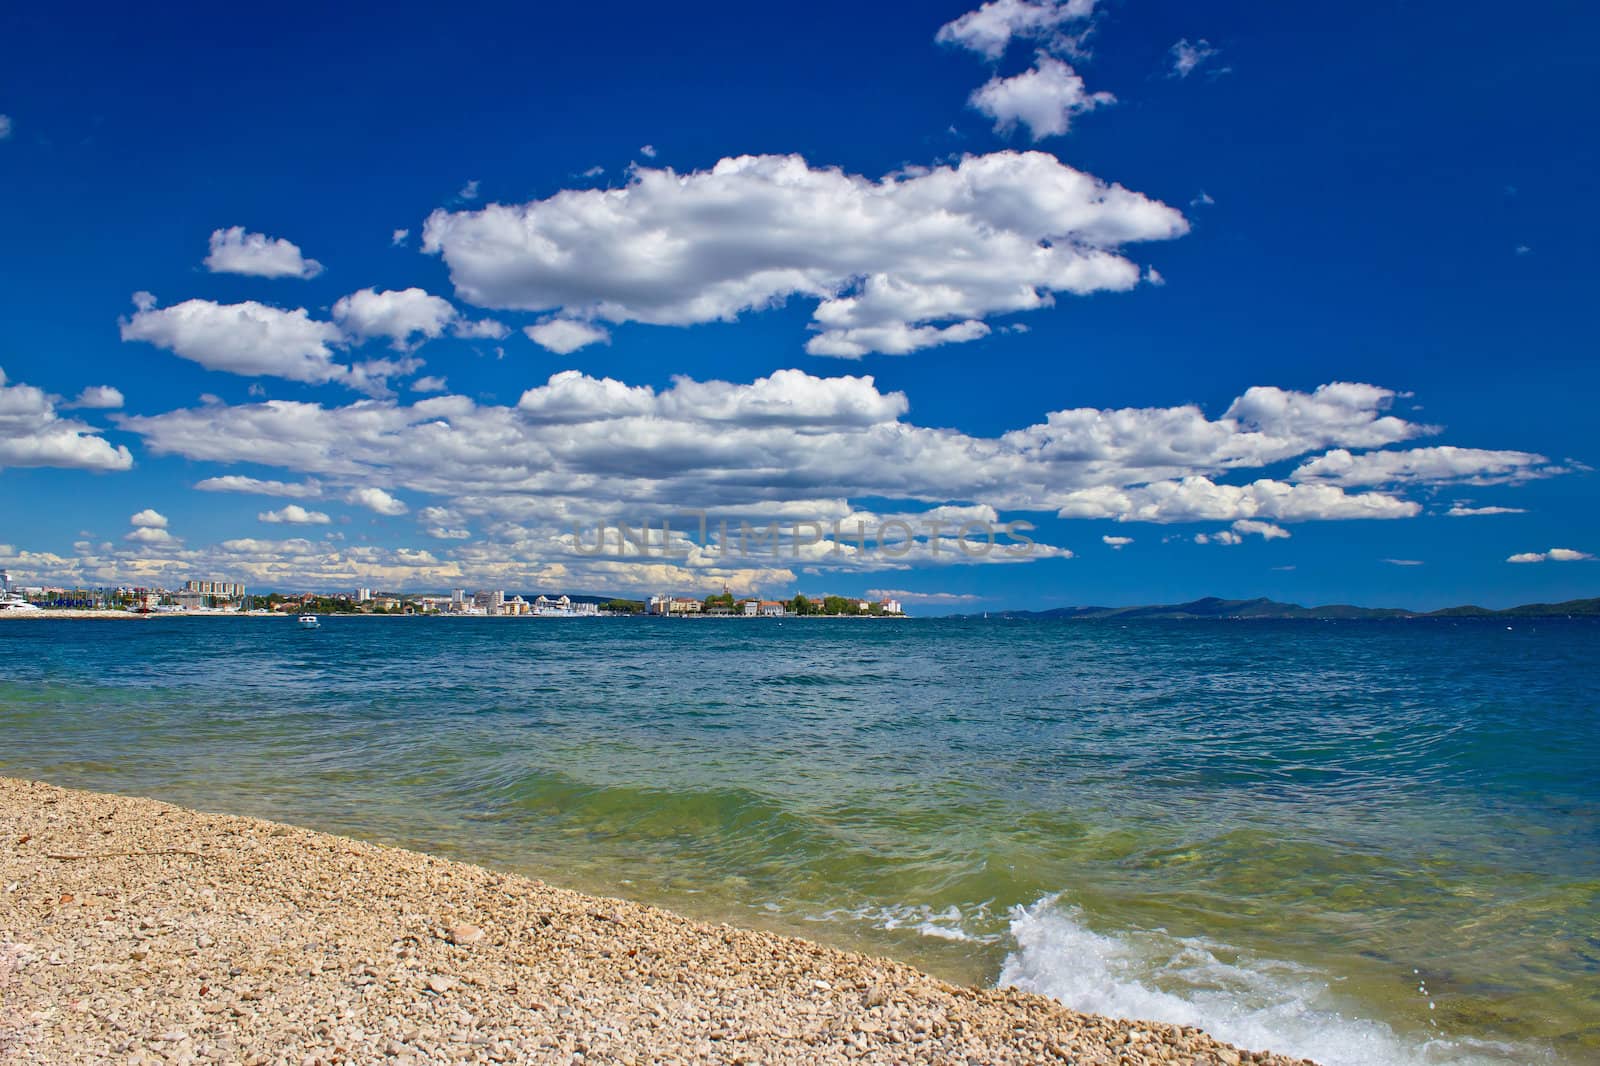 City of Zadar beach view by xbrchx